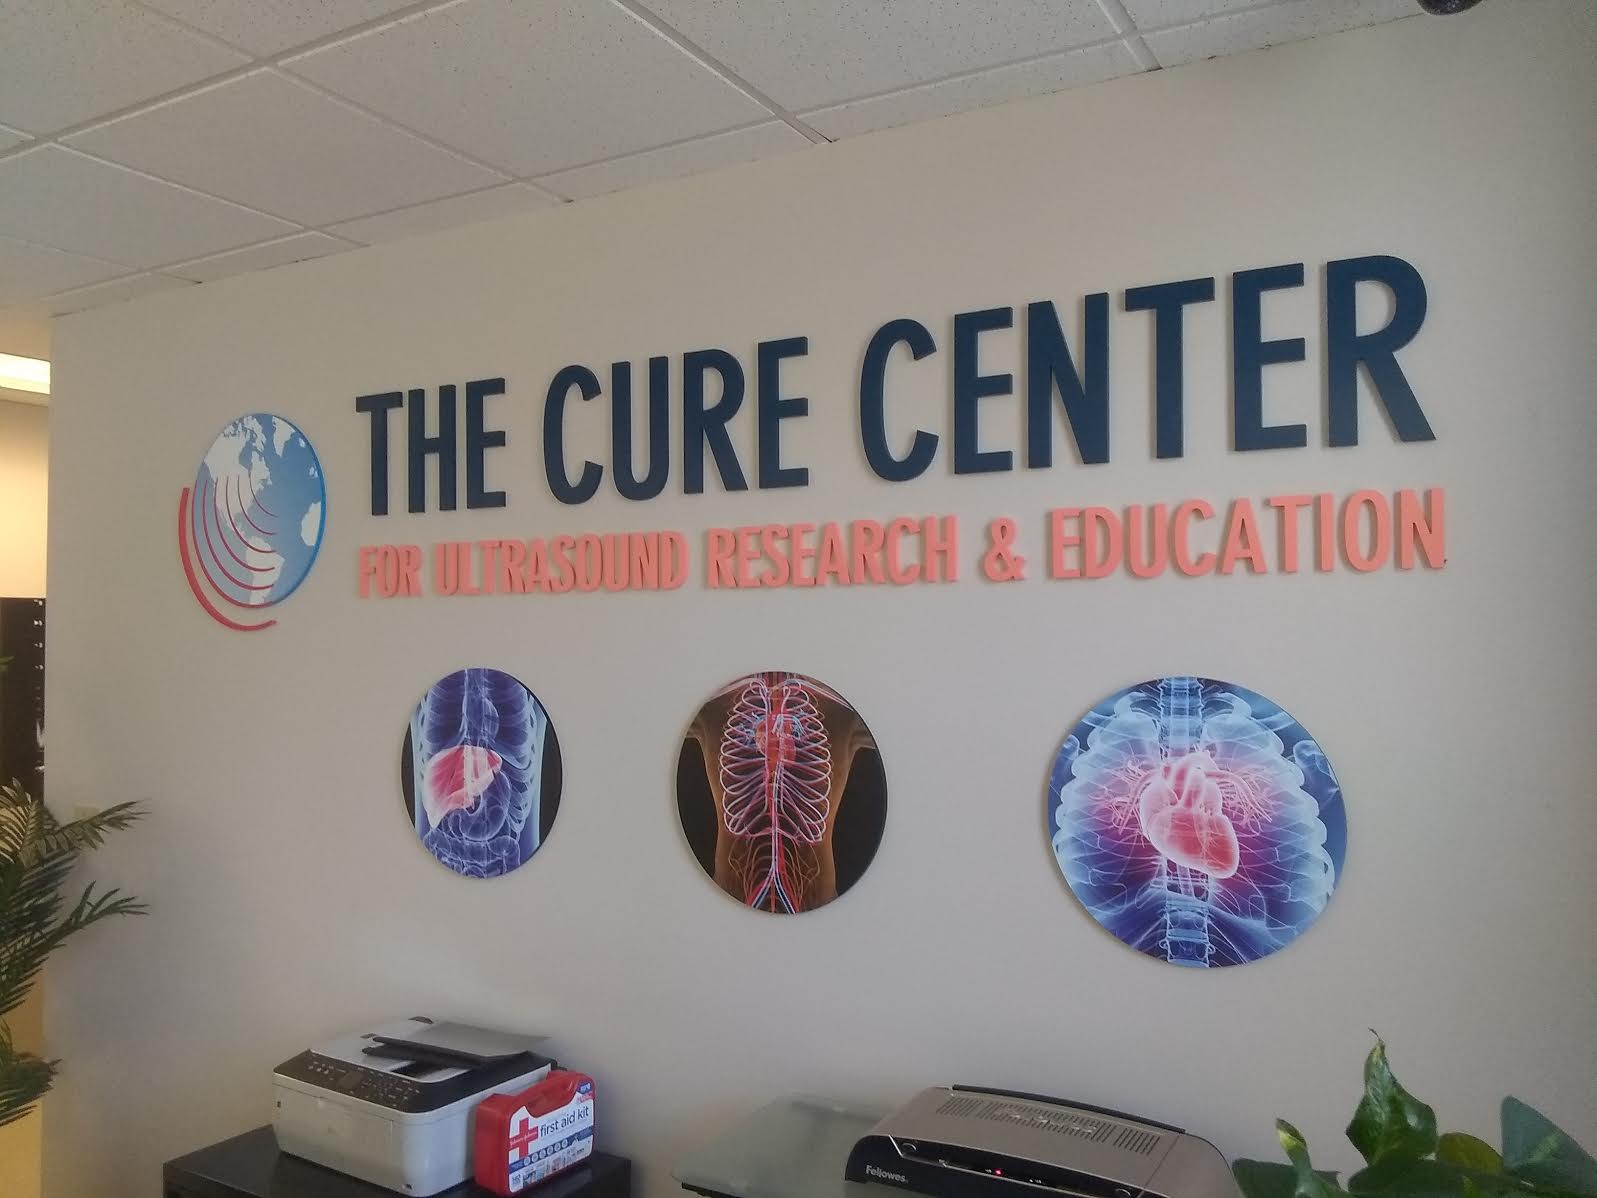 The Cure Center 3D Lettering Sign Design Port Chester, NY 10573 C.jpg